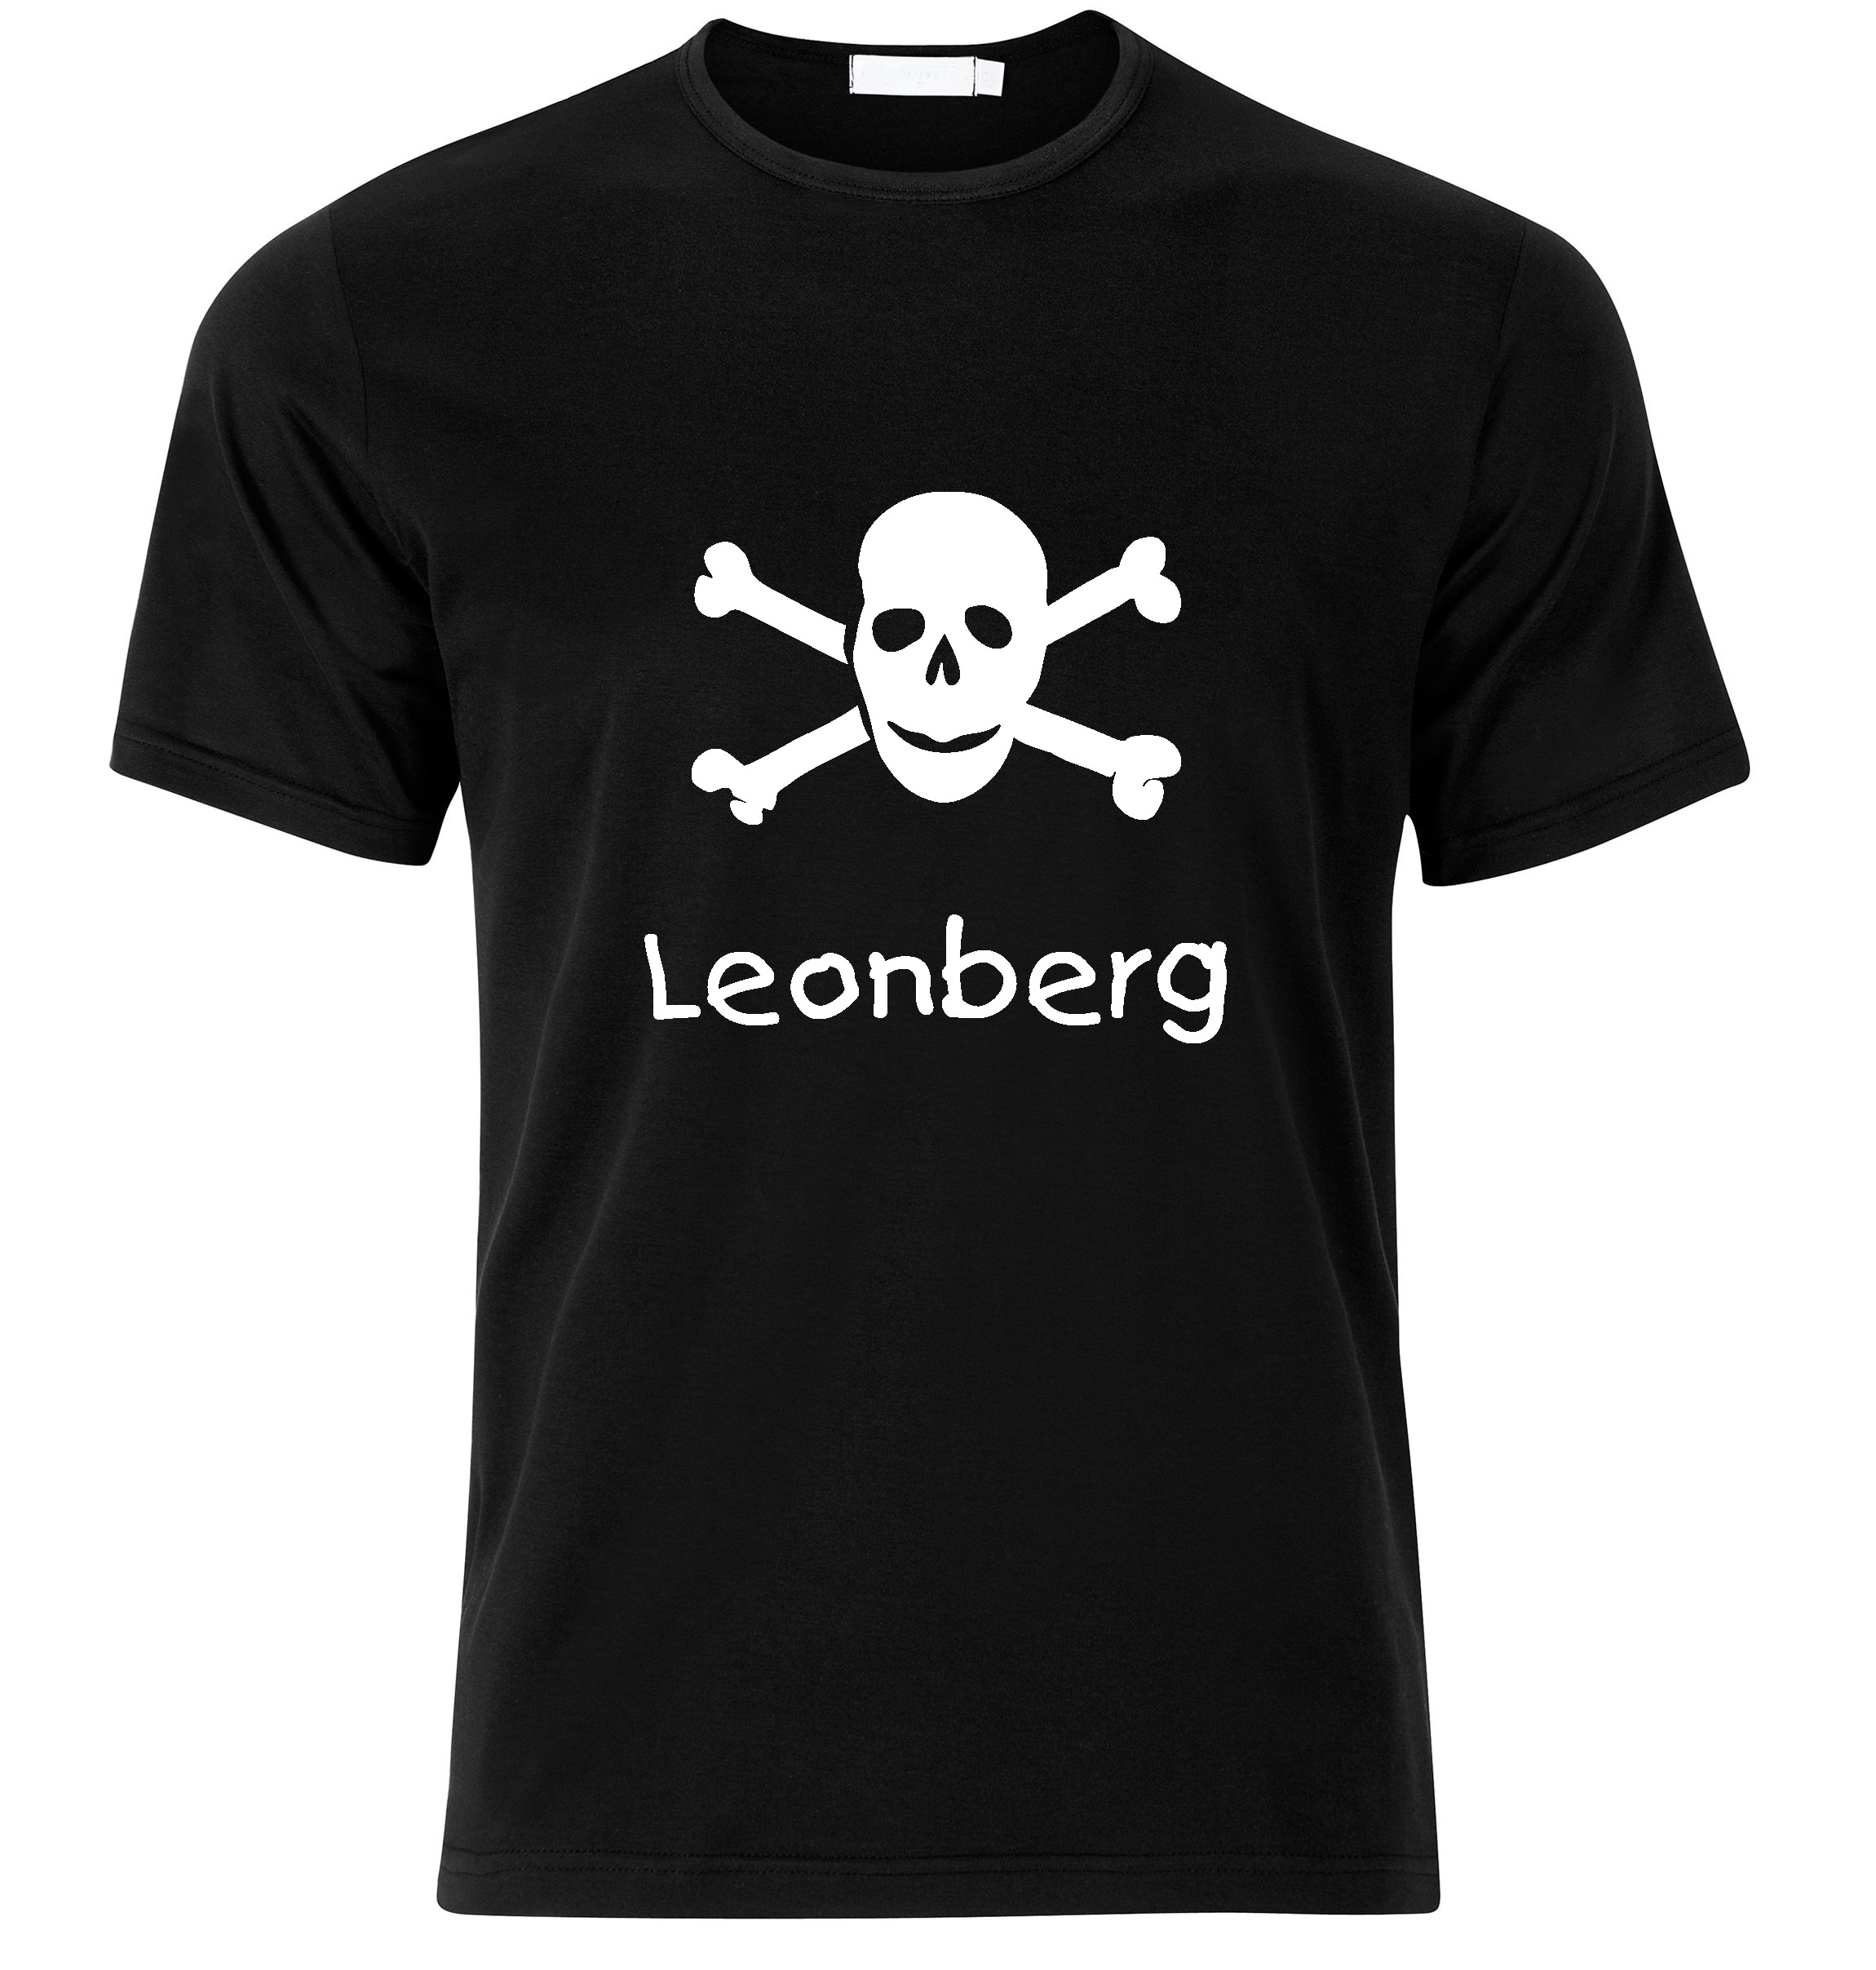 T-Shirt Leonberg Jolly Roger, Totenkopf